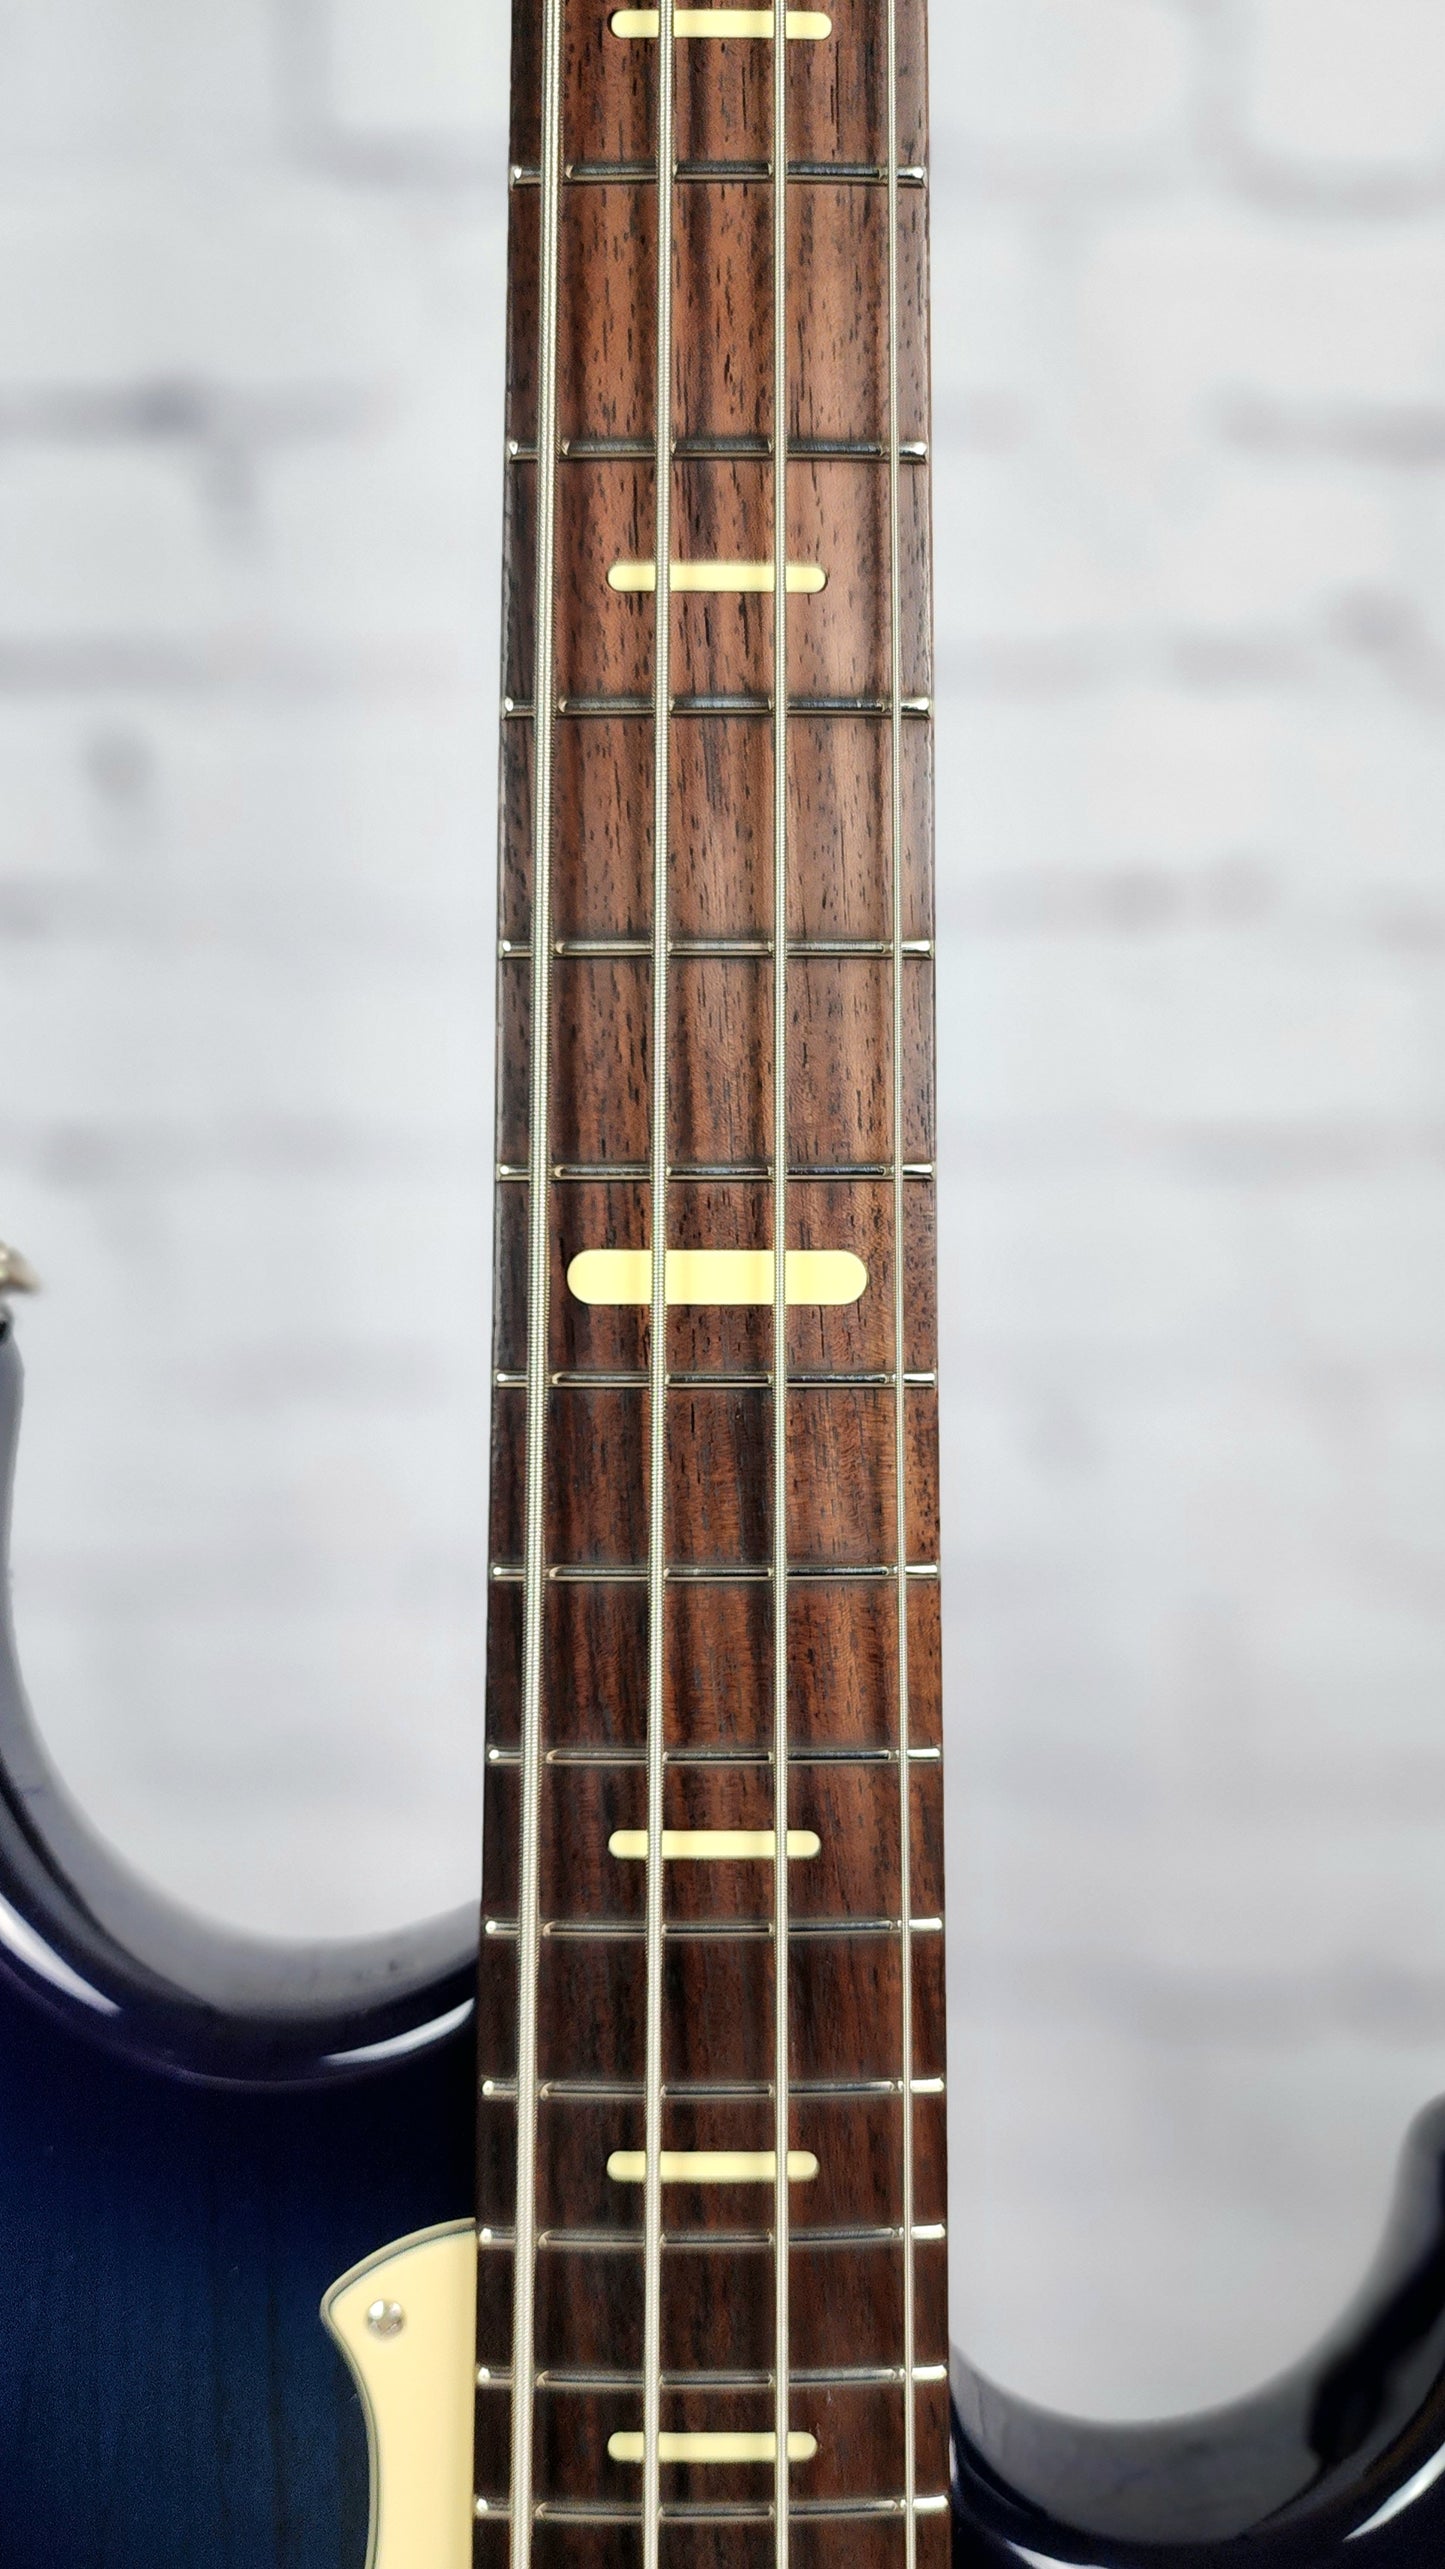 Yamaha BBP34II MB Professional 4 String Bass Midnight Blue